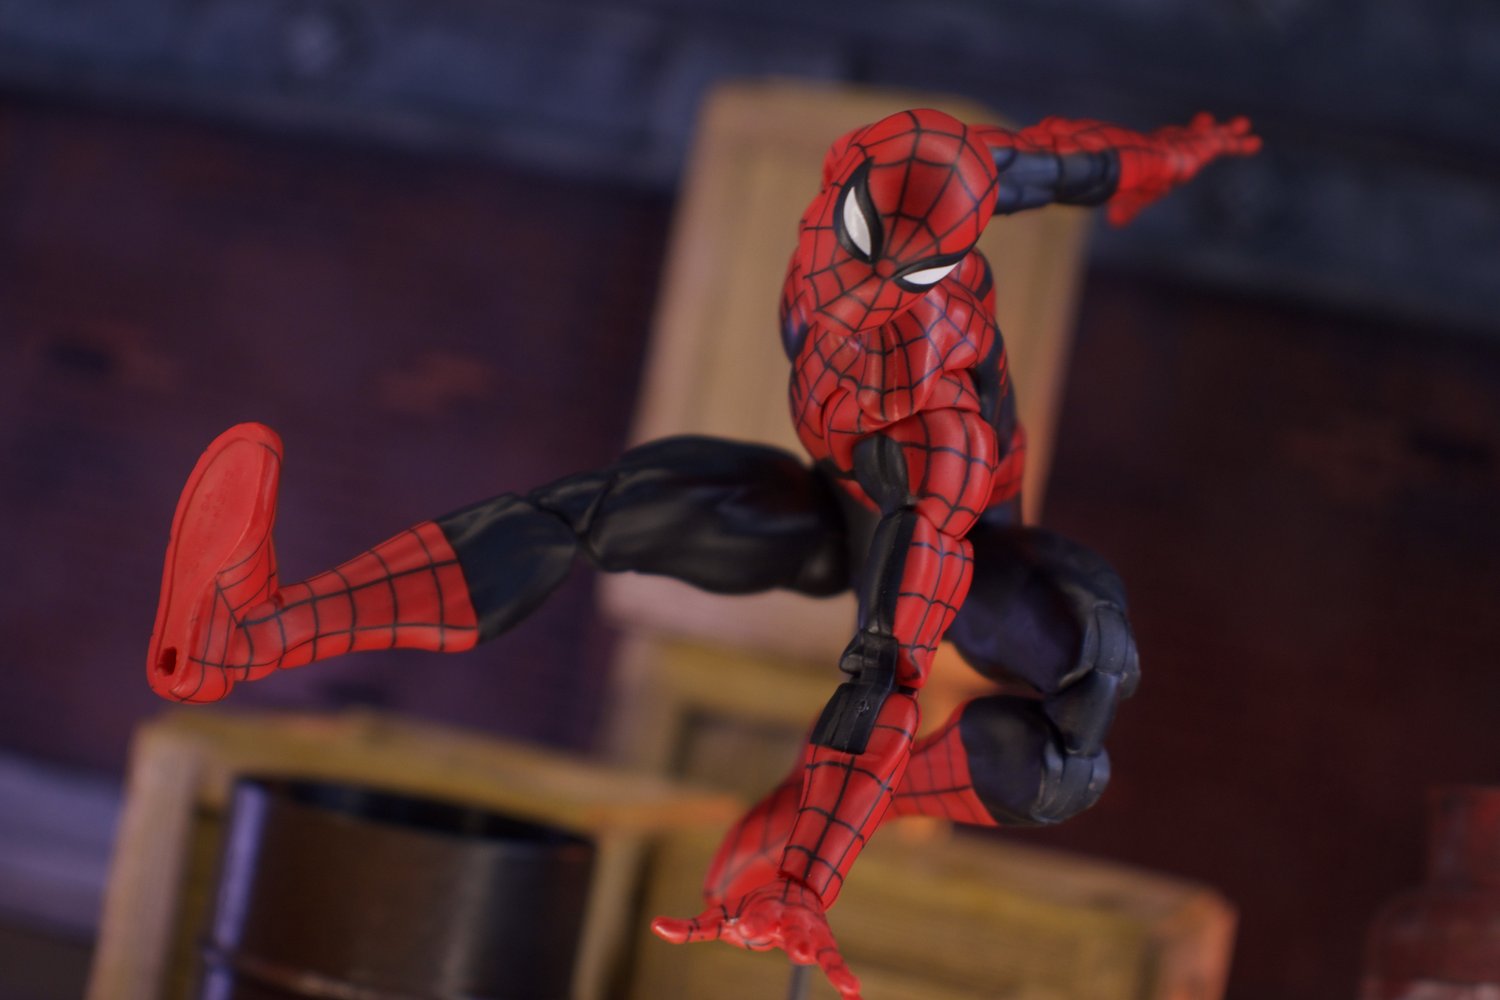 Marvel Legends Series Amazing Fantasy Spider Man — D Amazing